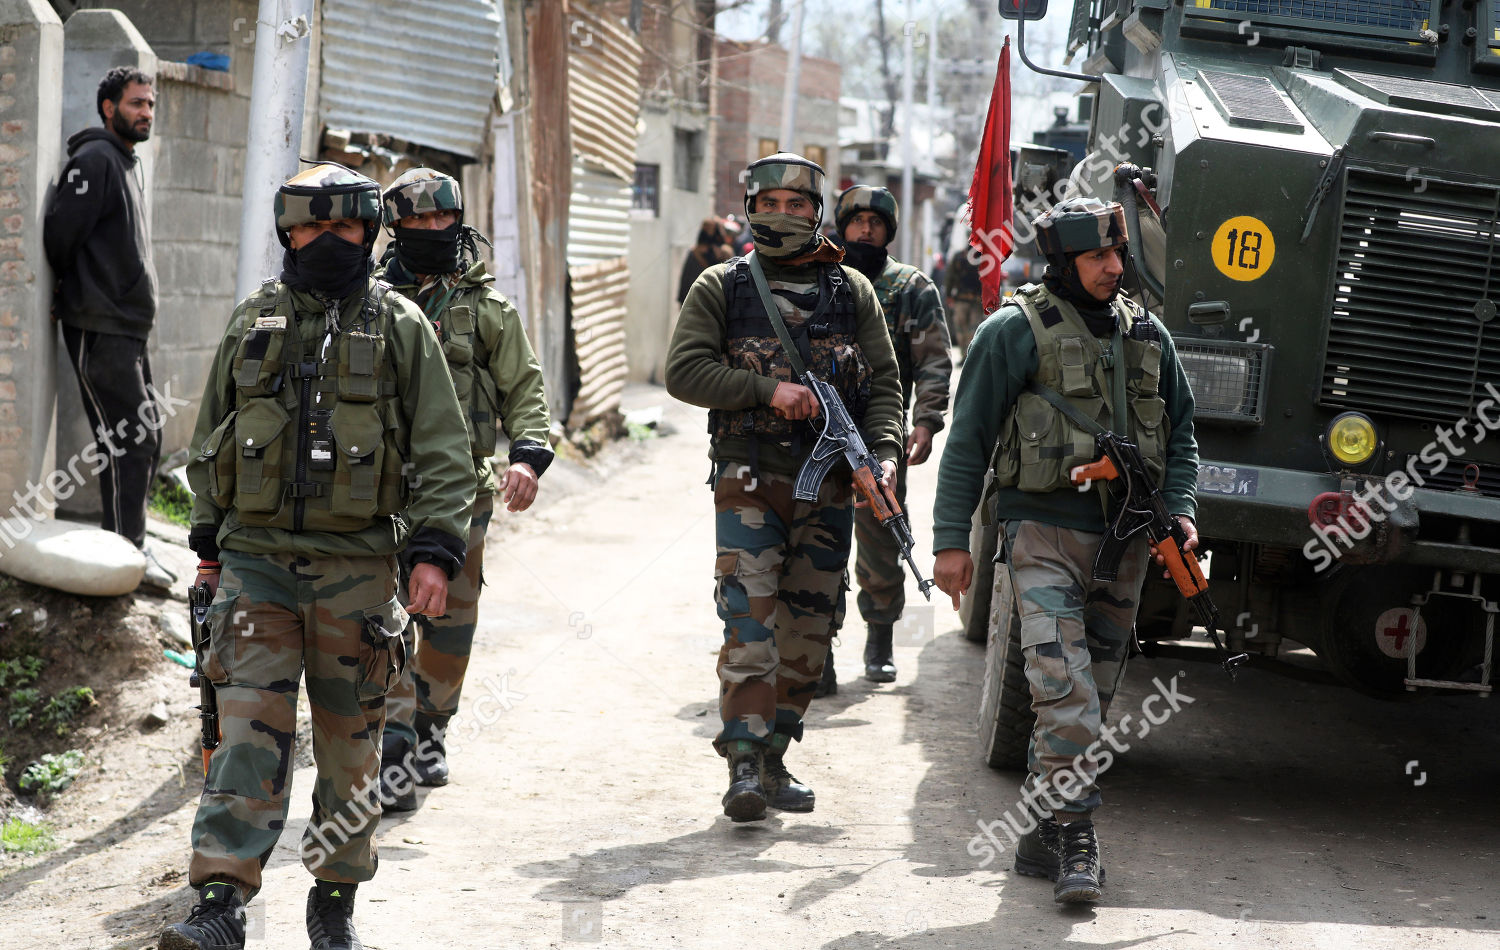 two-militants-killed-in-kashmir-khanmoh-india-shutterstock-editorial-9465470a.jpg